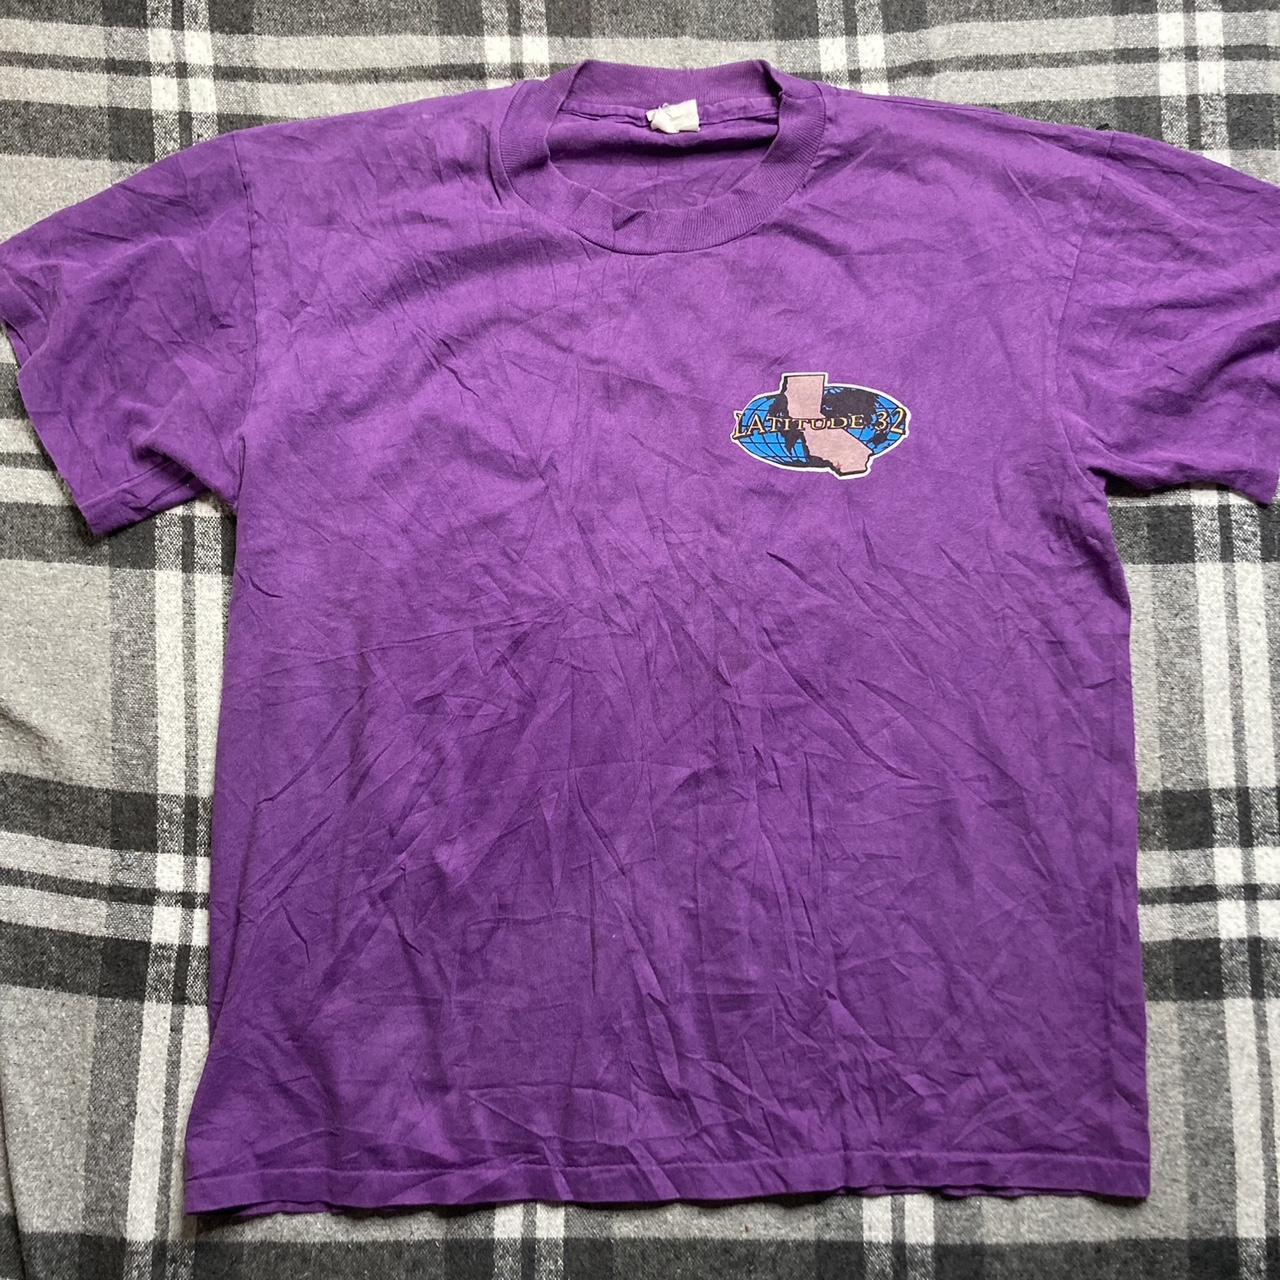 Vintage Single Stitch Purple T Shirt California... - Depop